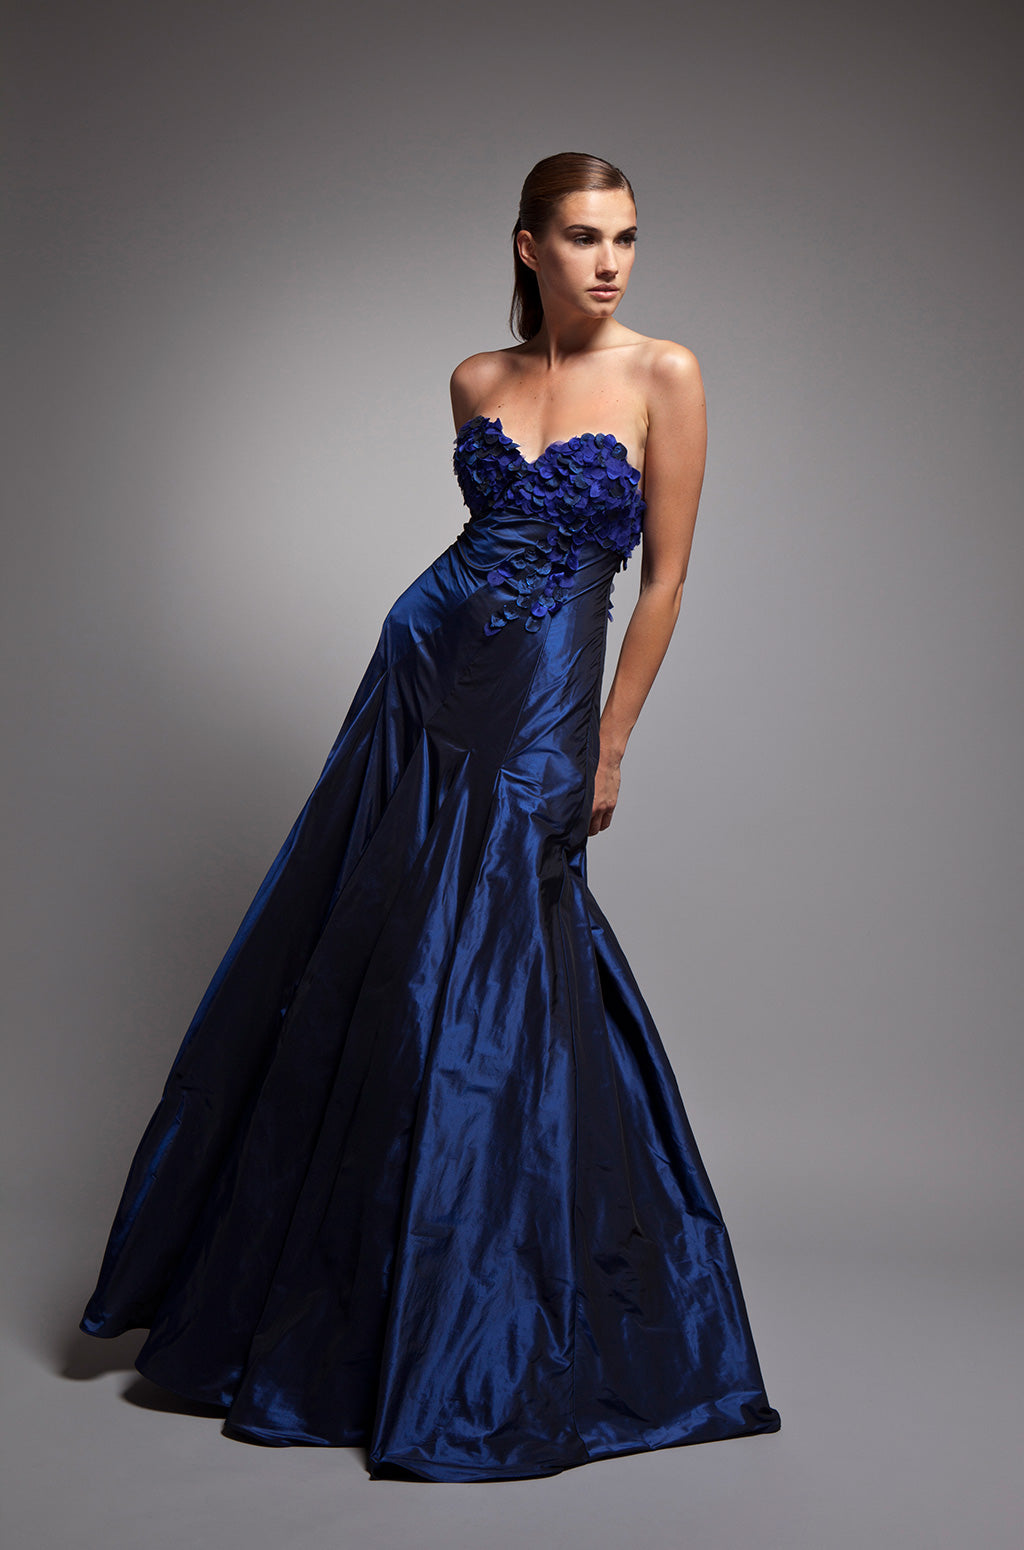 Cristina - Sapphire taffeta strapless gown